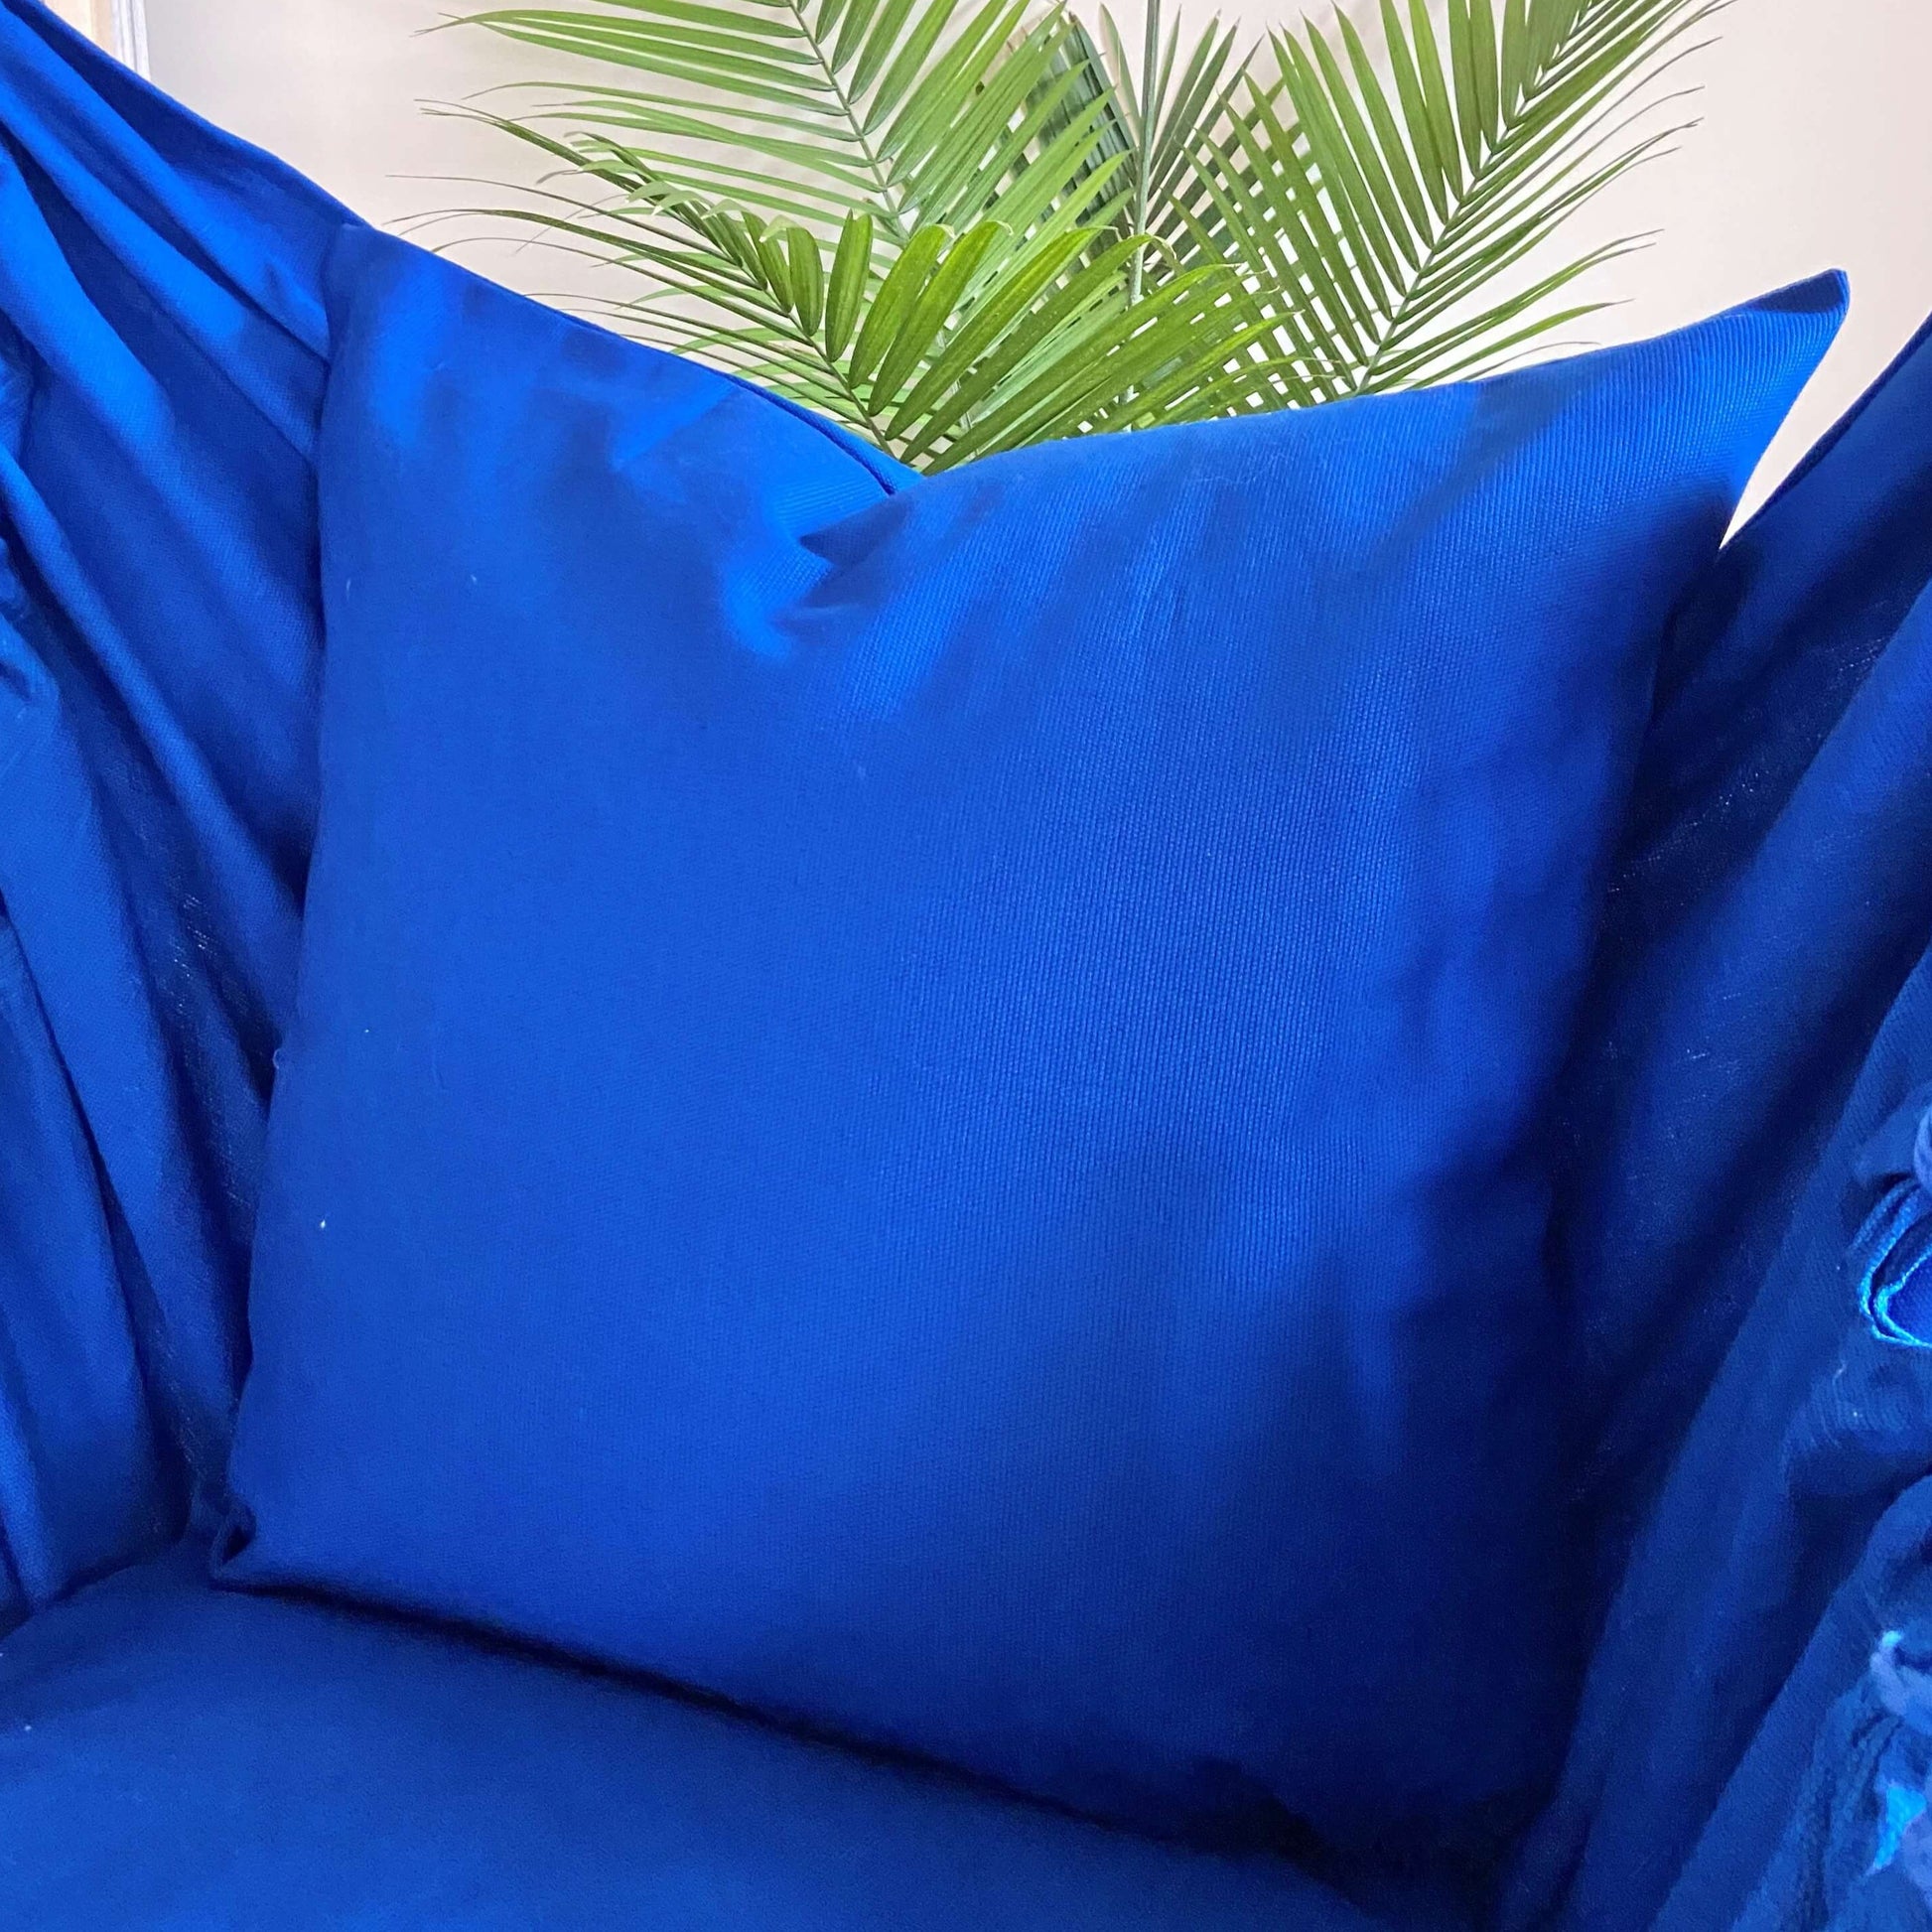 Blue  pillow for a Macrame Hanging Chair Hammock